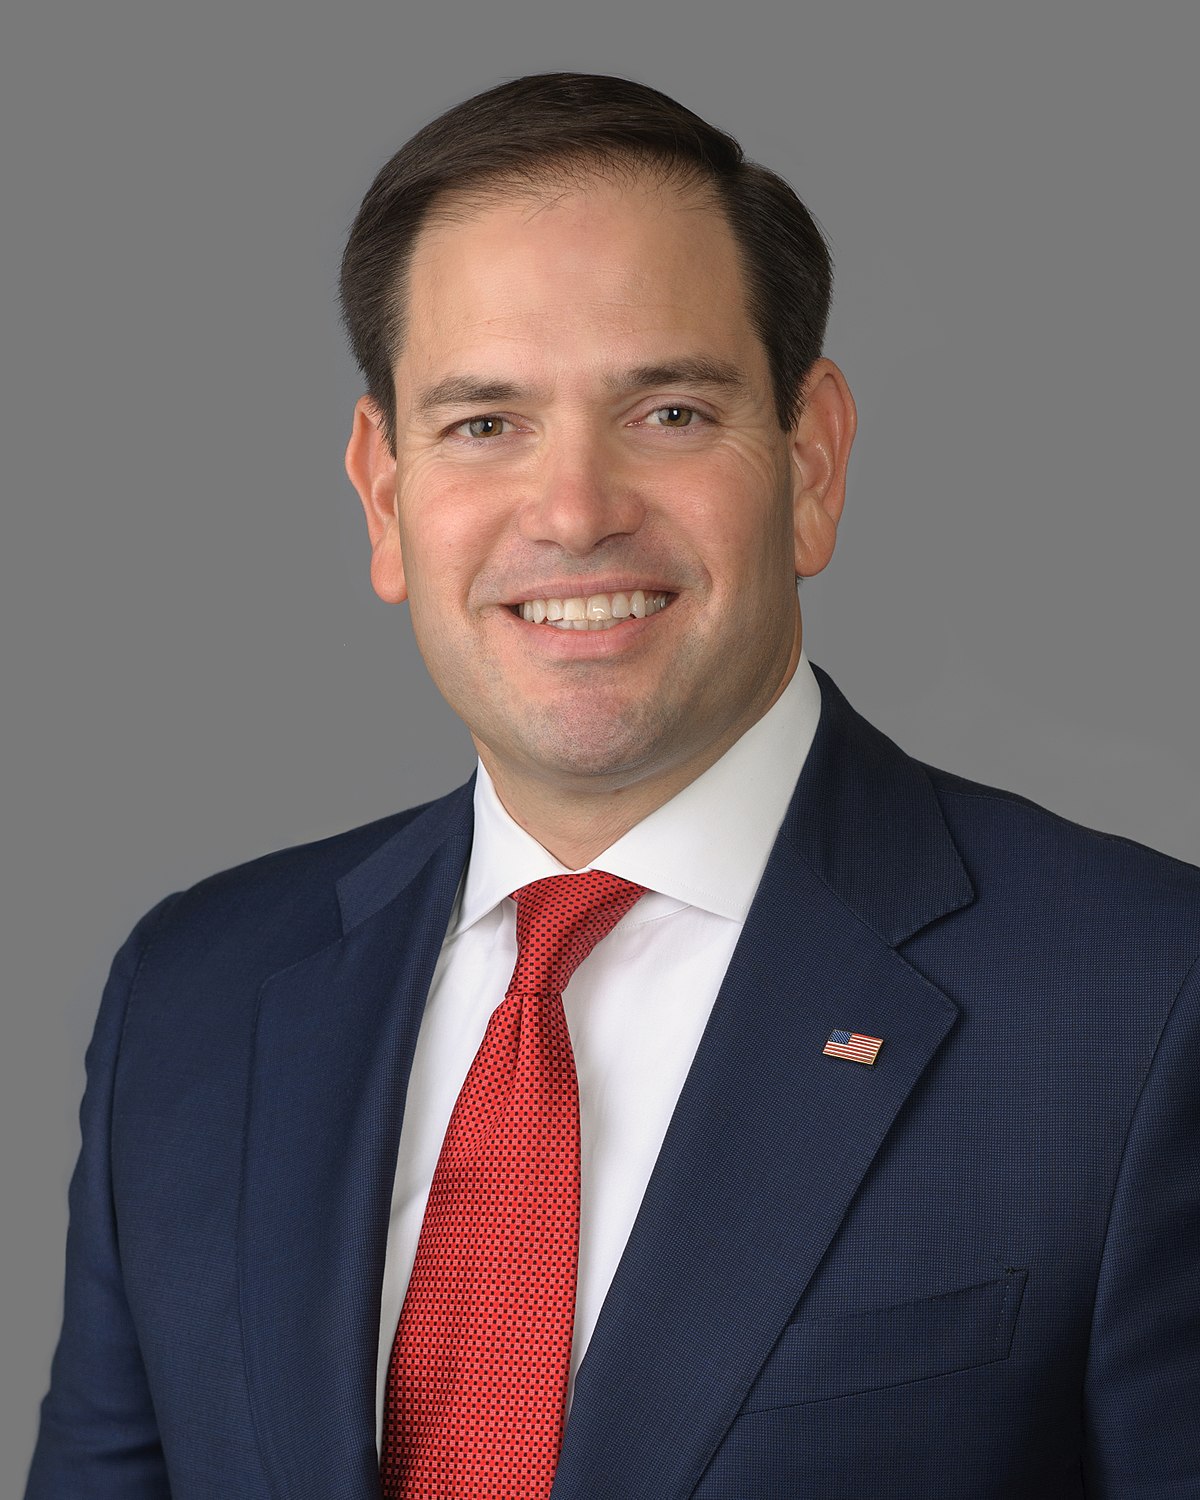 United States Senate election in Florida, 2016